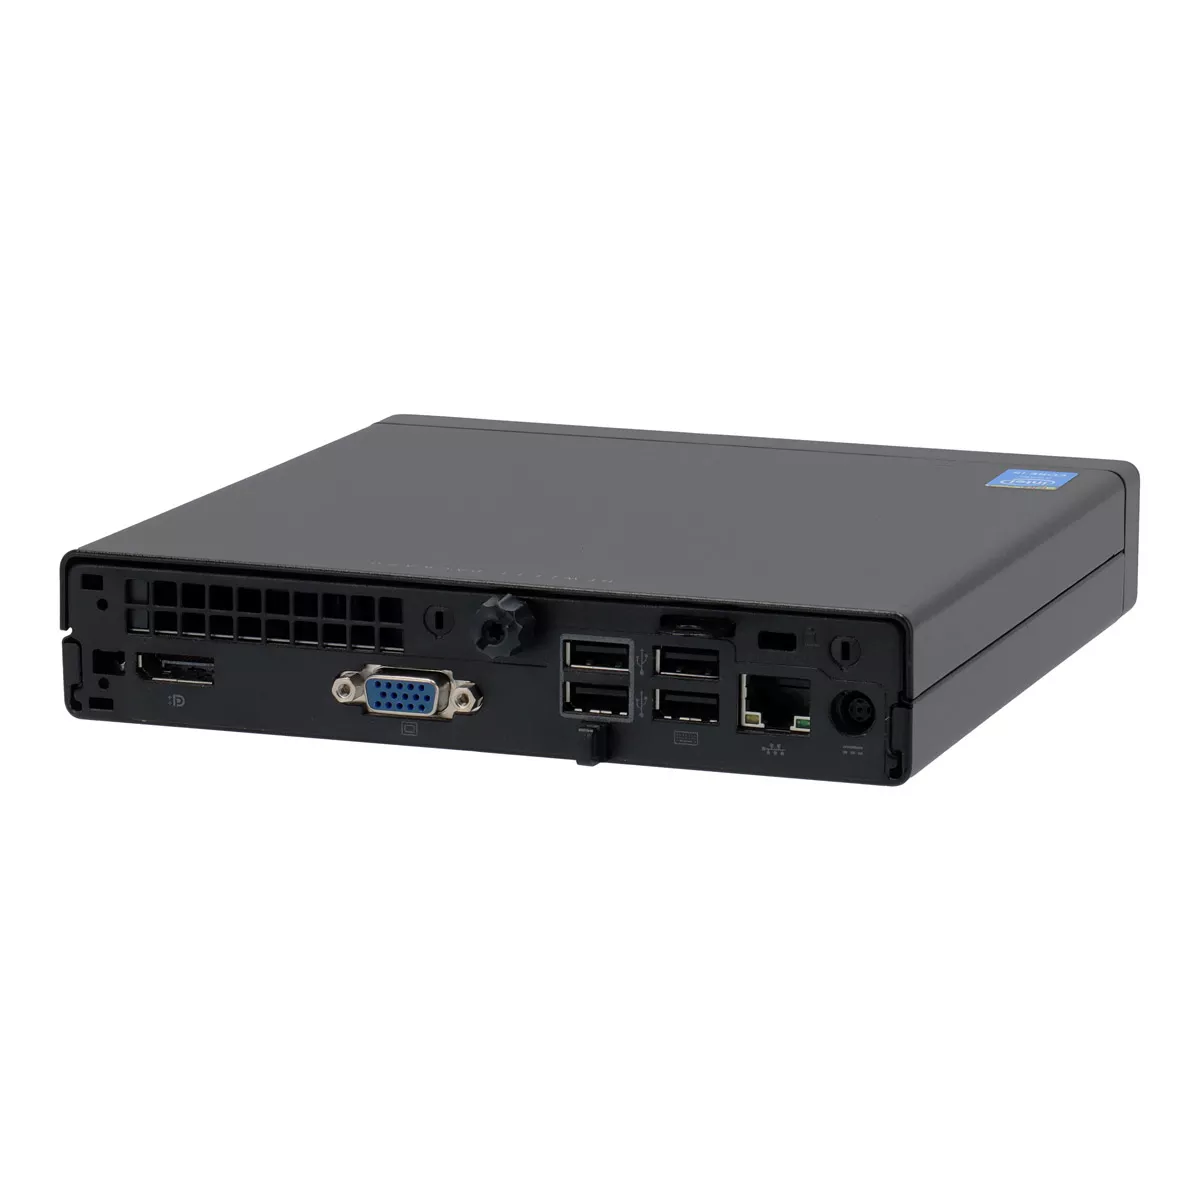 HP ProDesk 400 G1 Mini QuadCore i5 4590T 8 GB 240 GB SSD